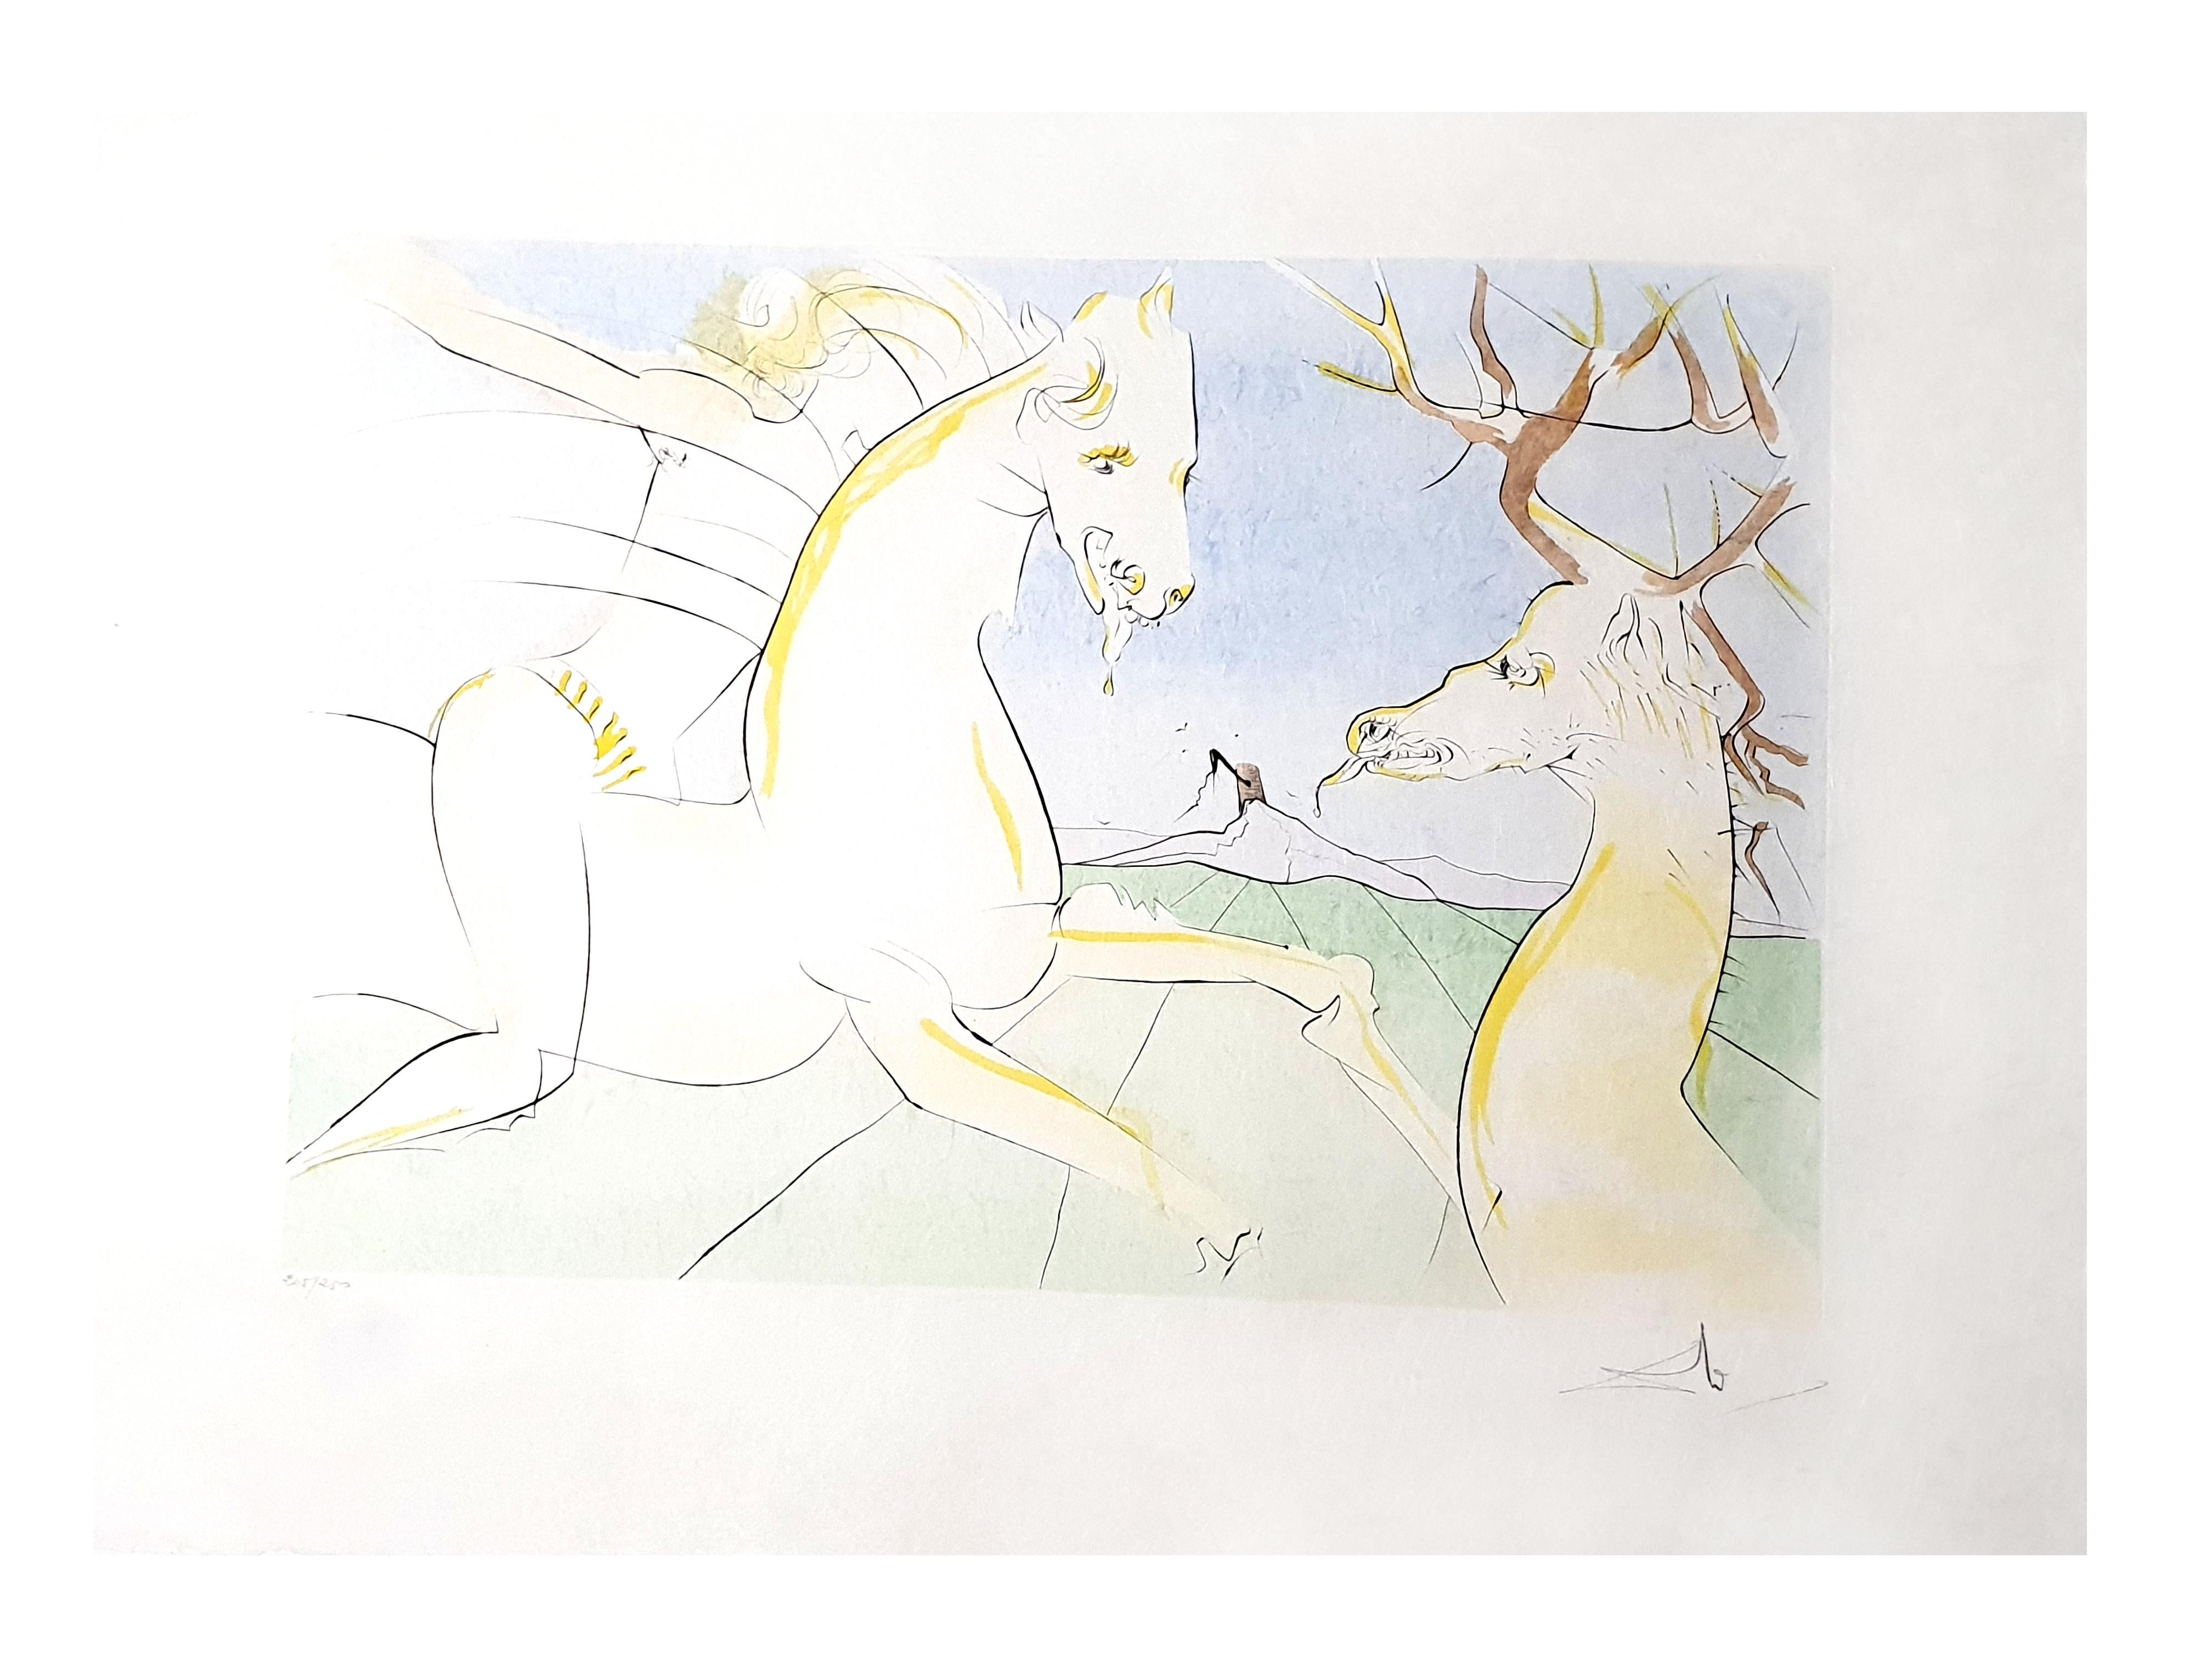 Salvador Dali - The Rider and the Deer - Handsigned Engraving - Beige Animal Print by Salvador Dalí